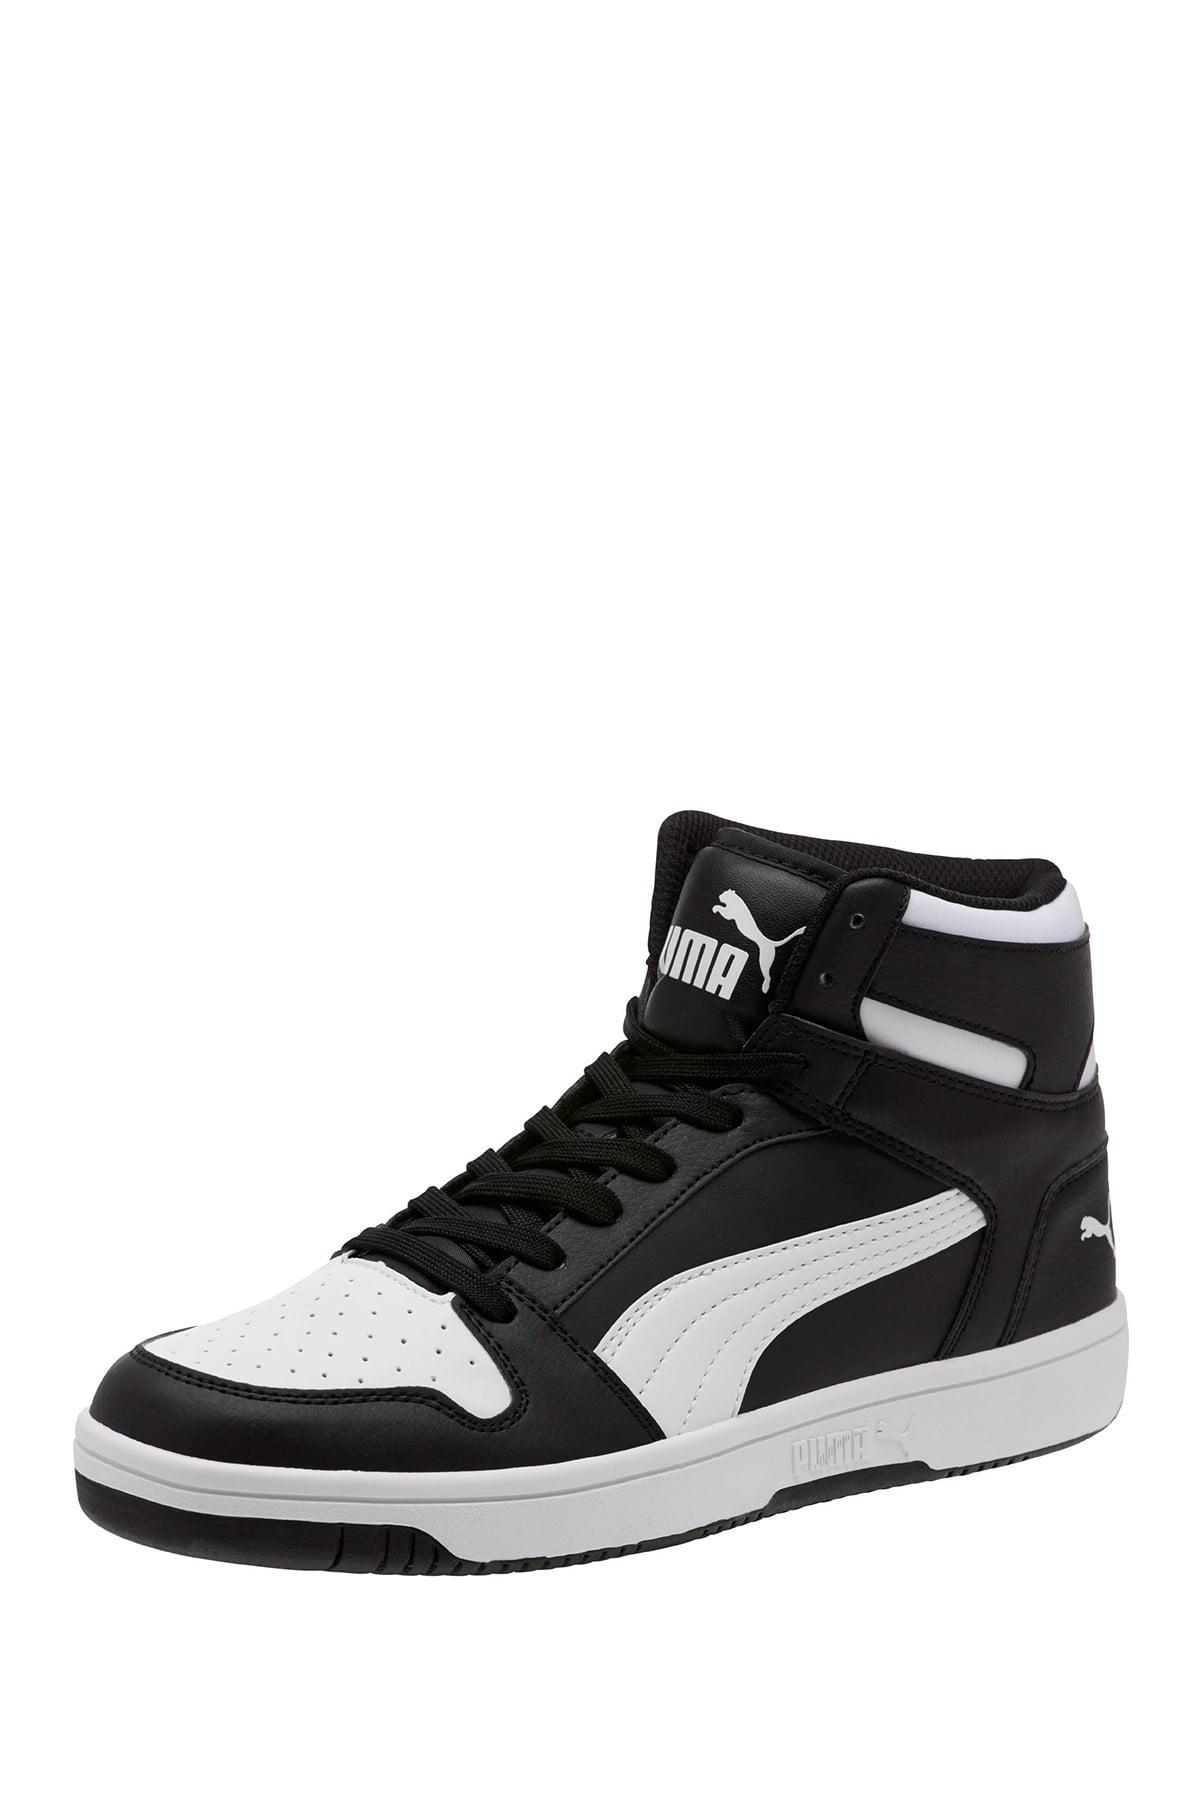 PUMA Rebound Layup Sneakers in Black/White (Black) for Men - Save 39% ...